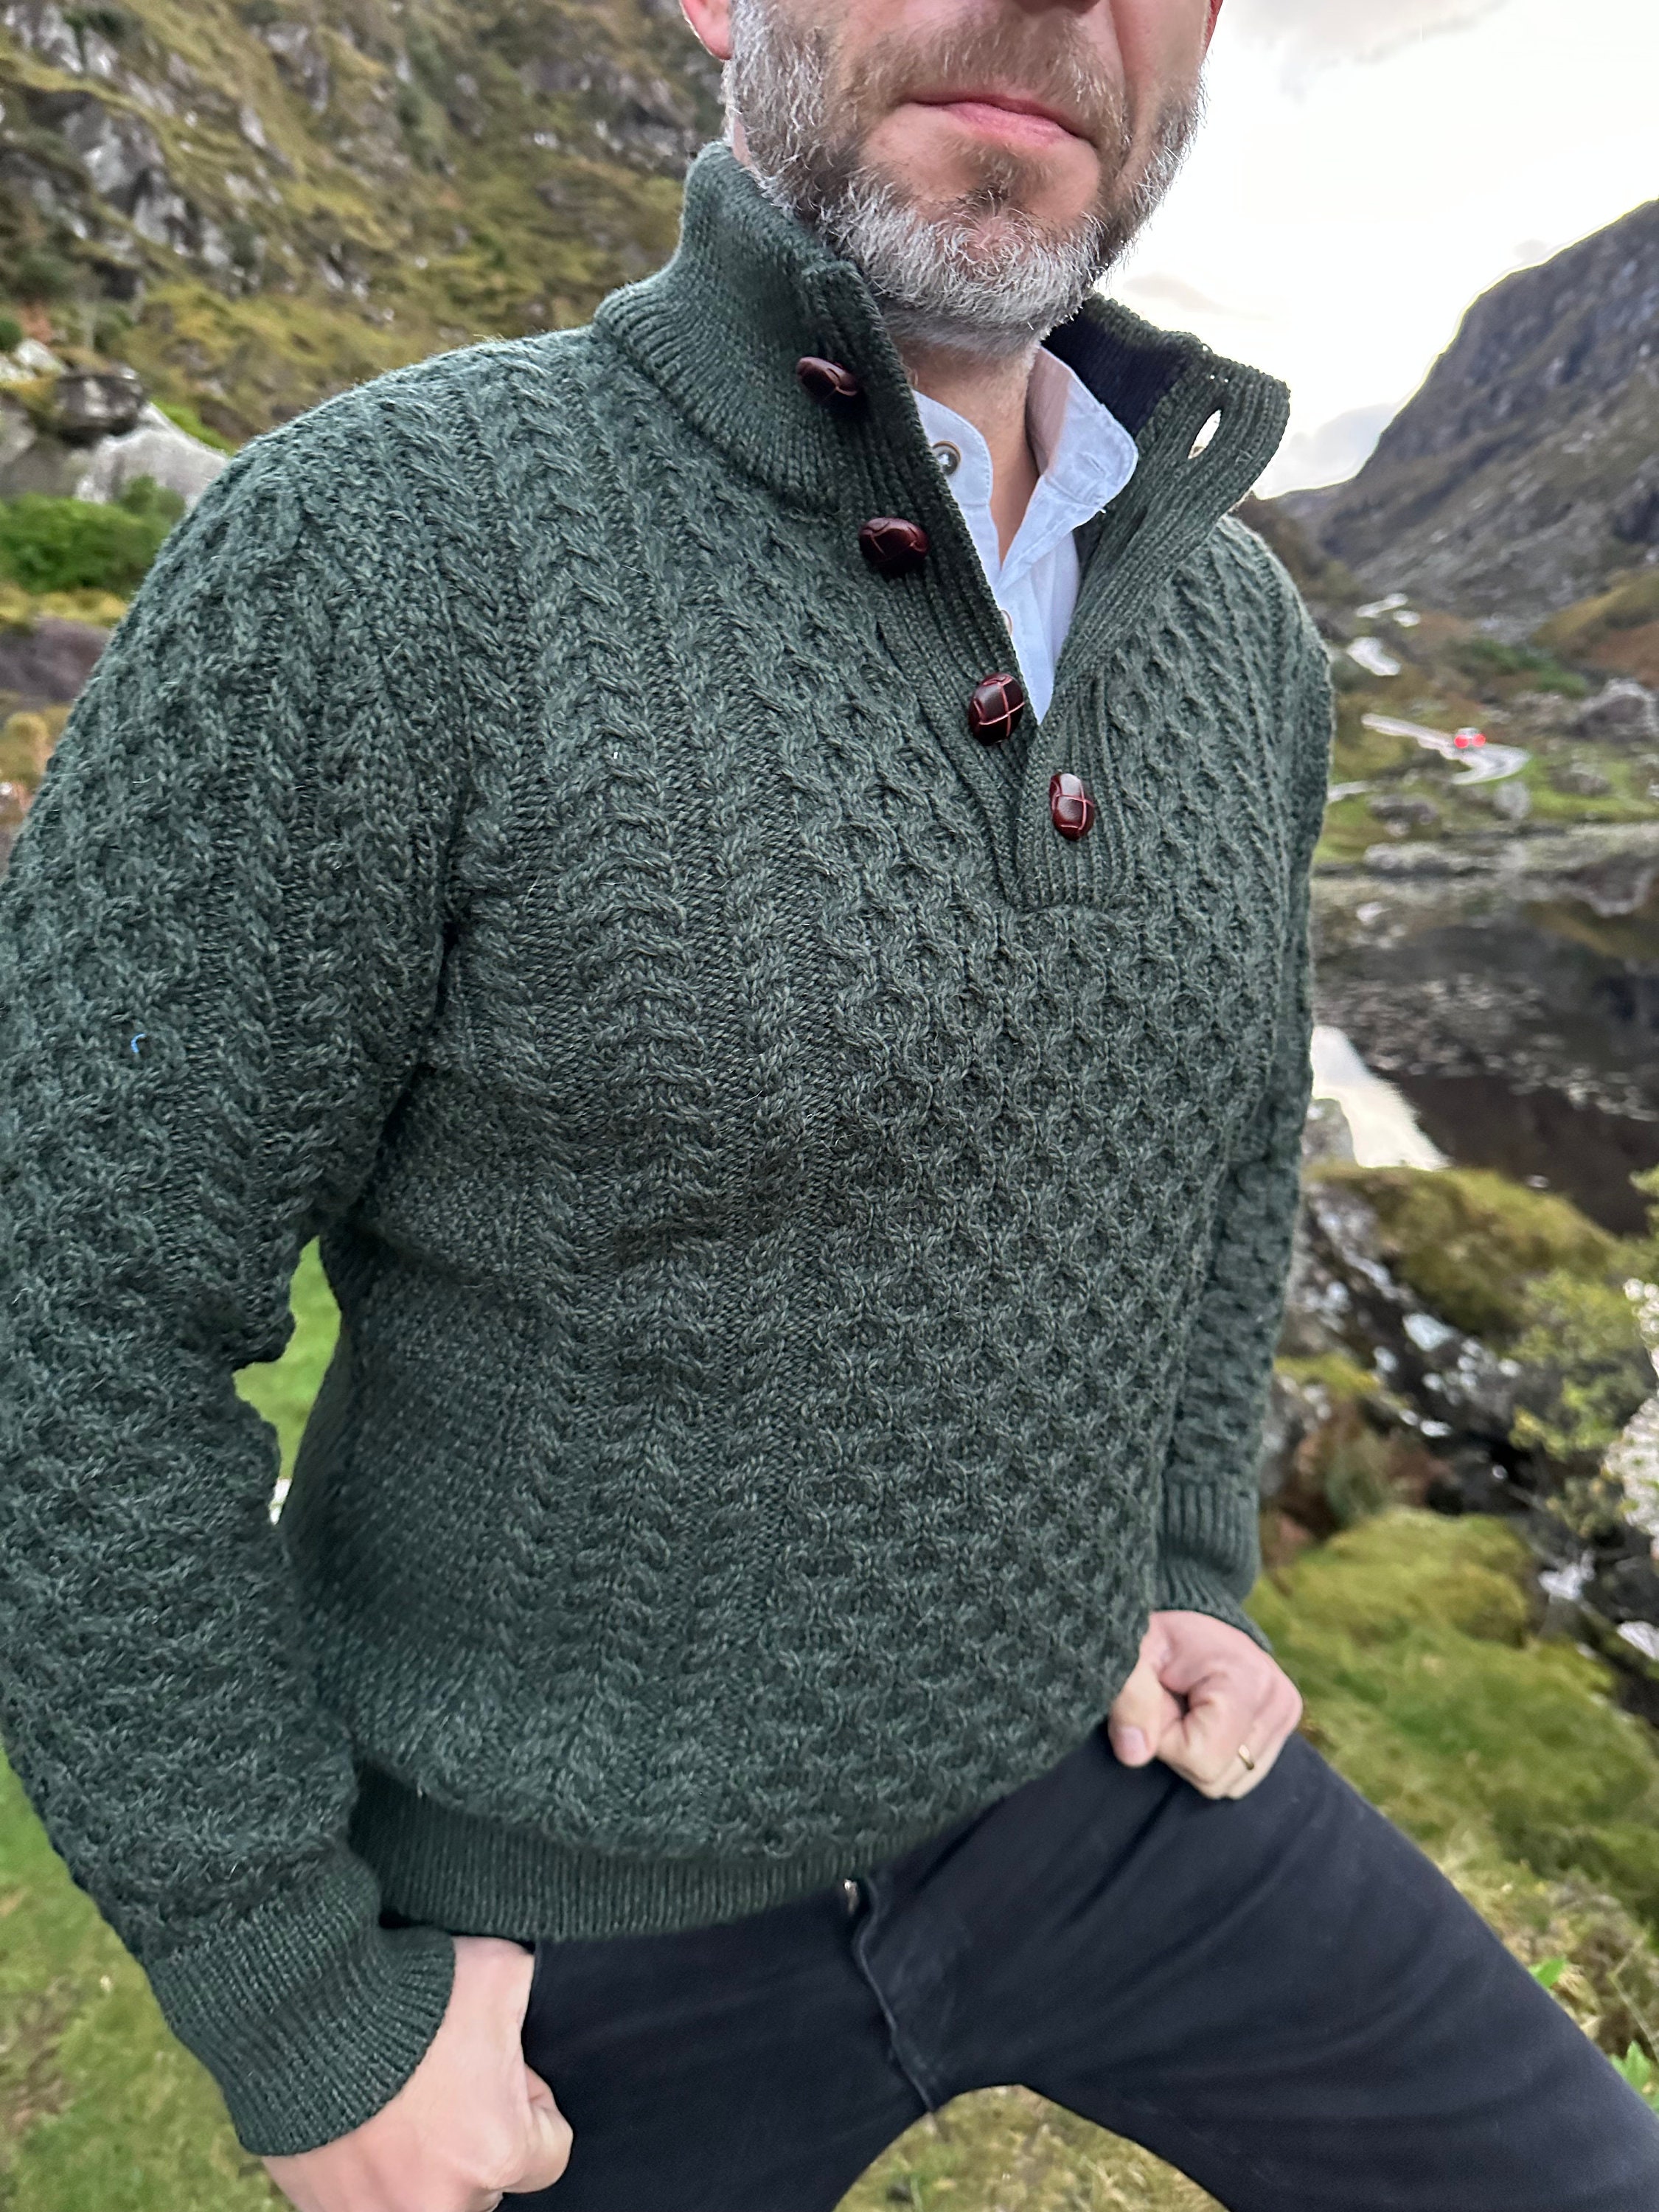 Women's Outlander Style Merino Wool and Cashmere Wrap — Real Irish